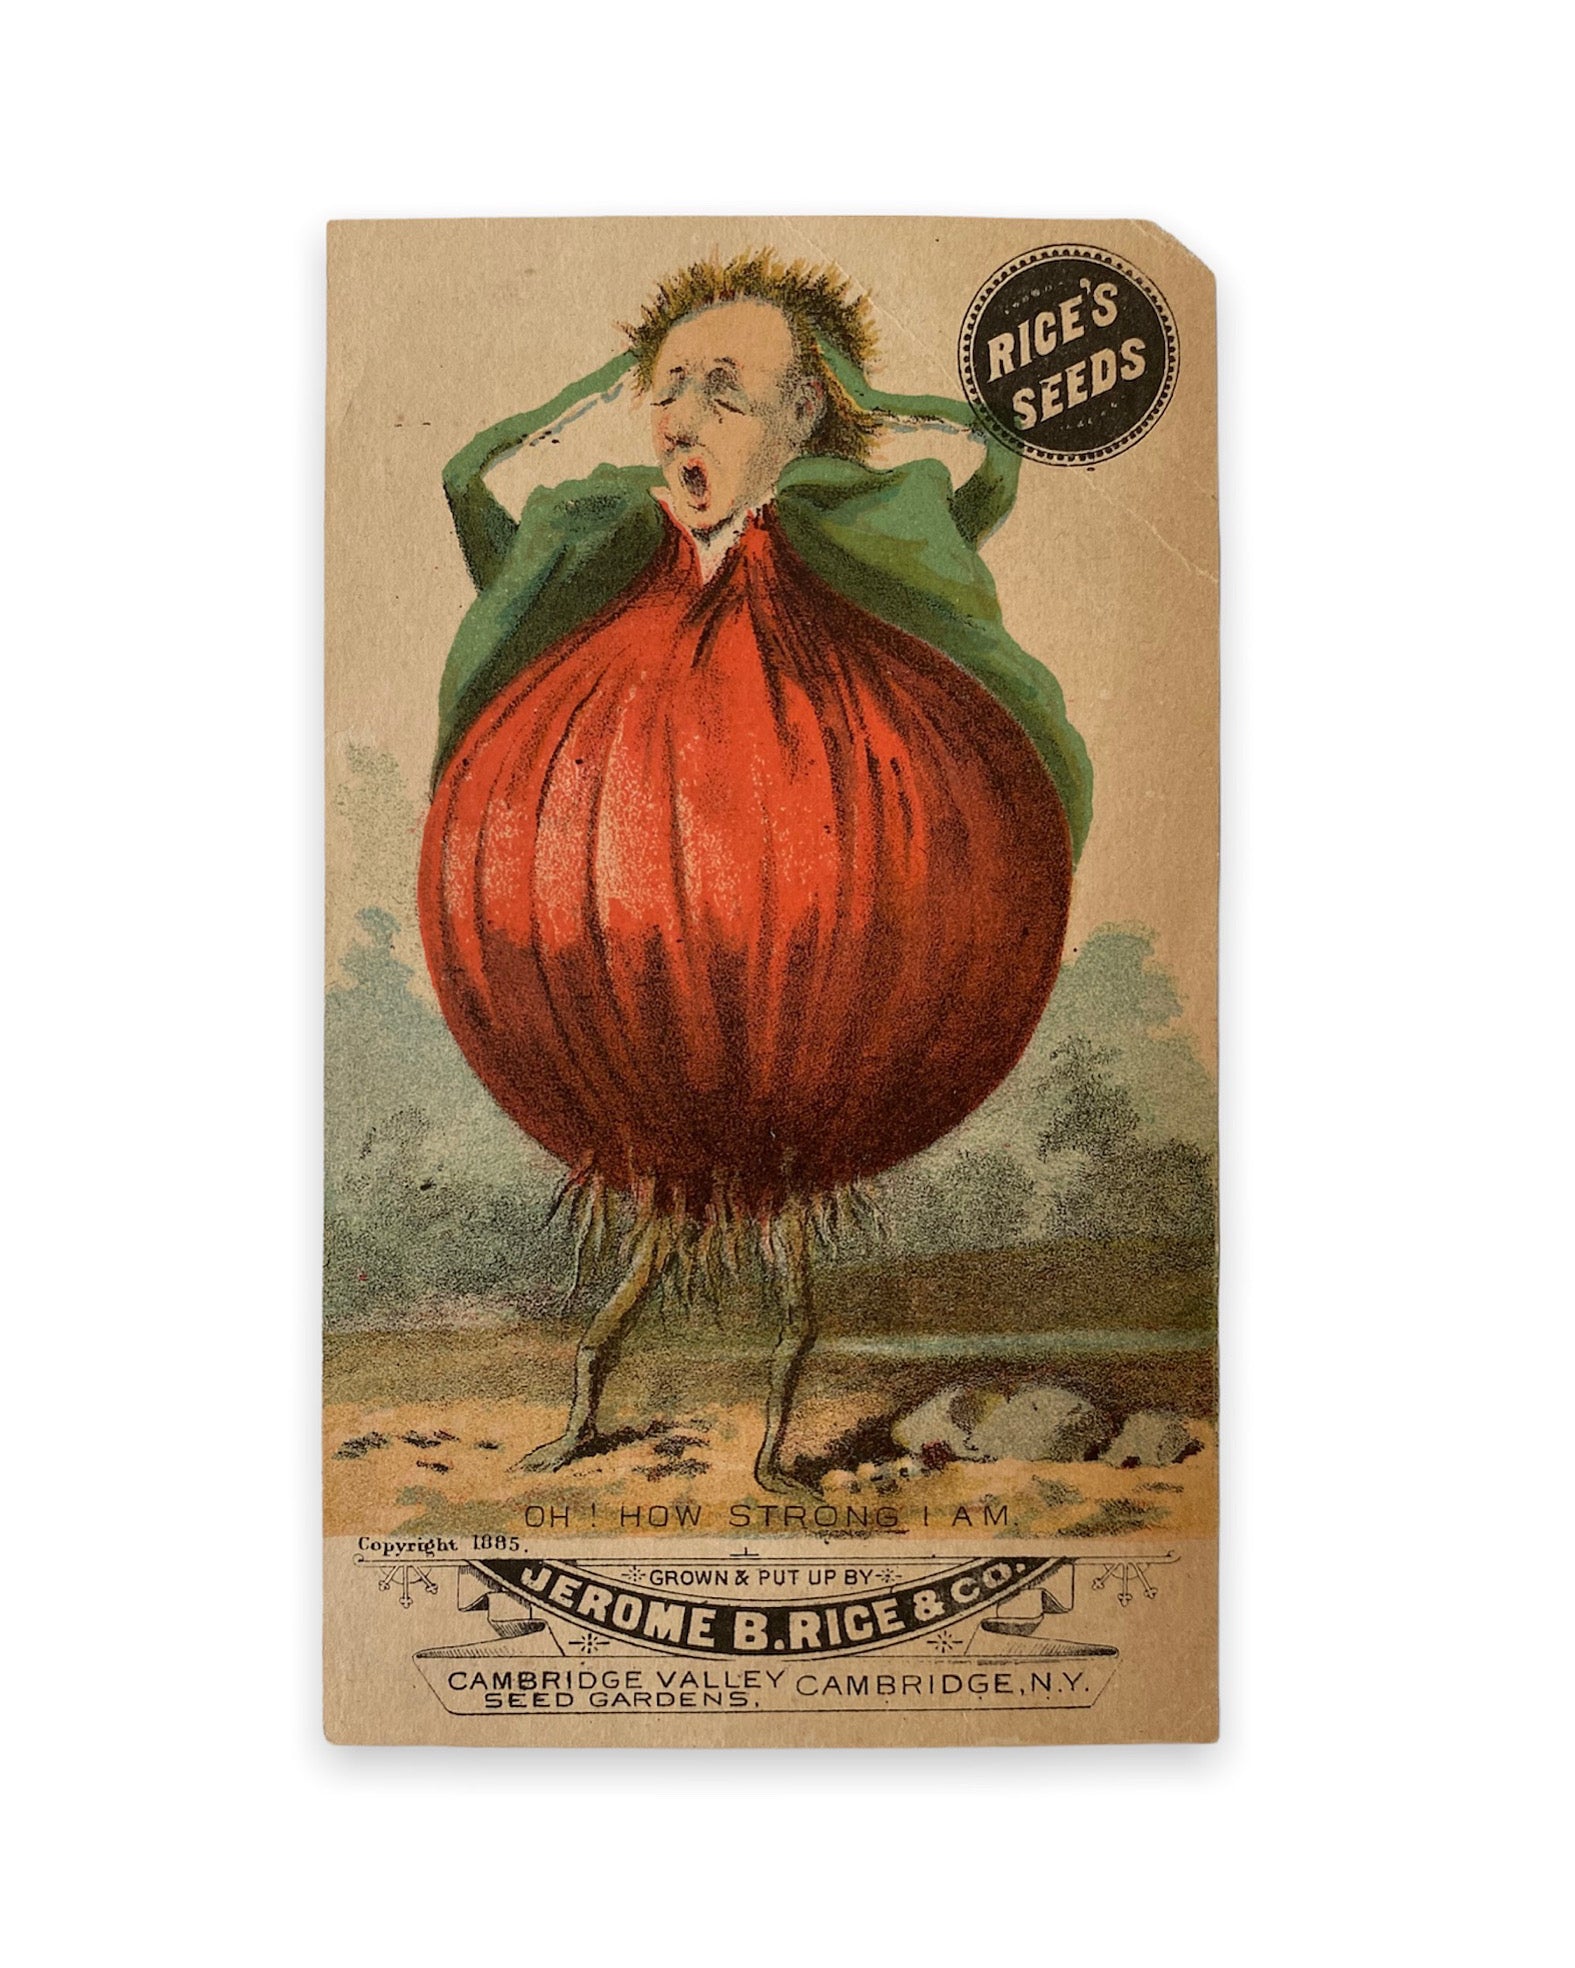 Onion Man Victorian Trade Card